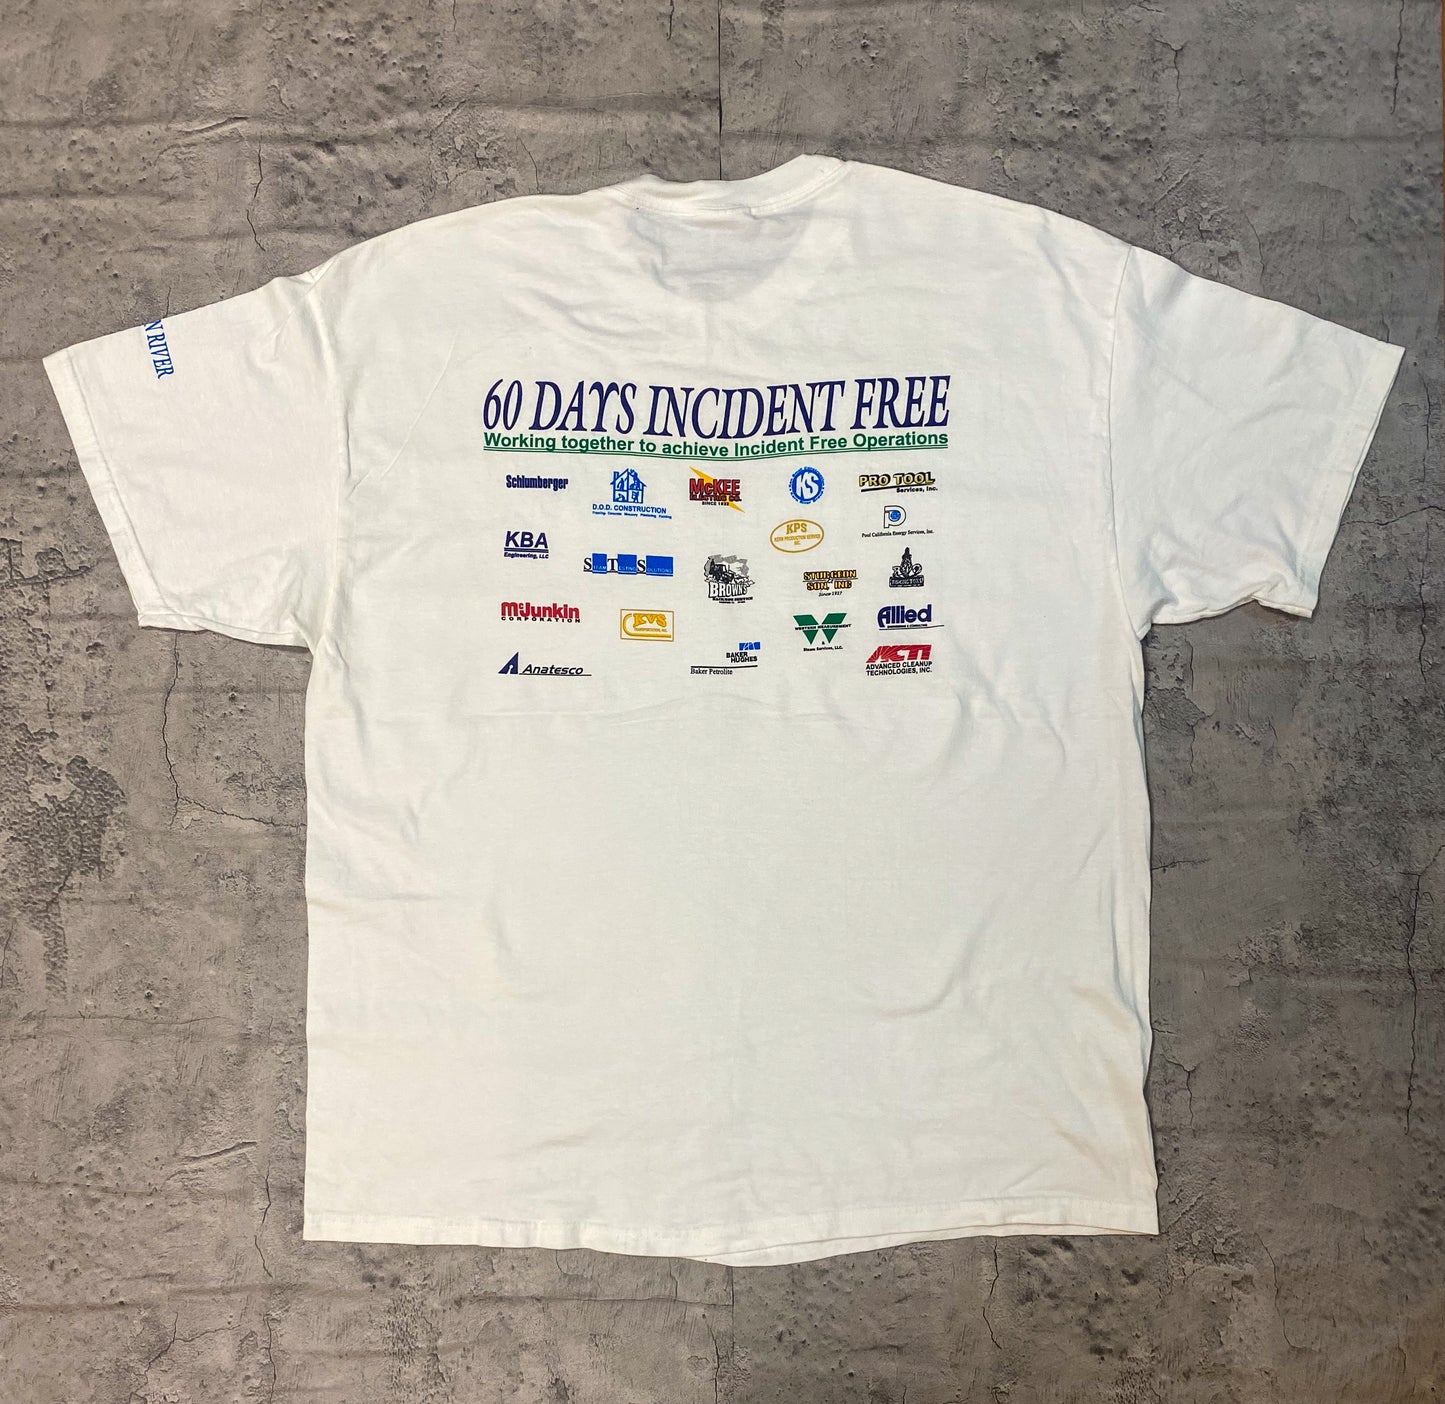 USA Oversized Printed T-shirts vintage 80s